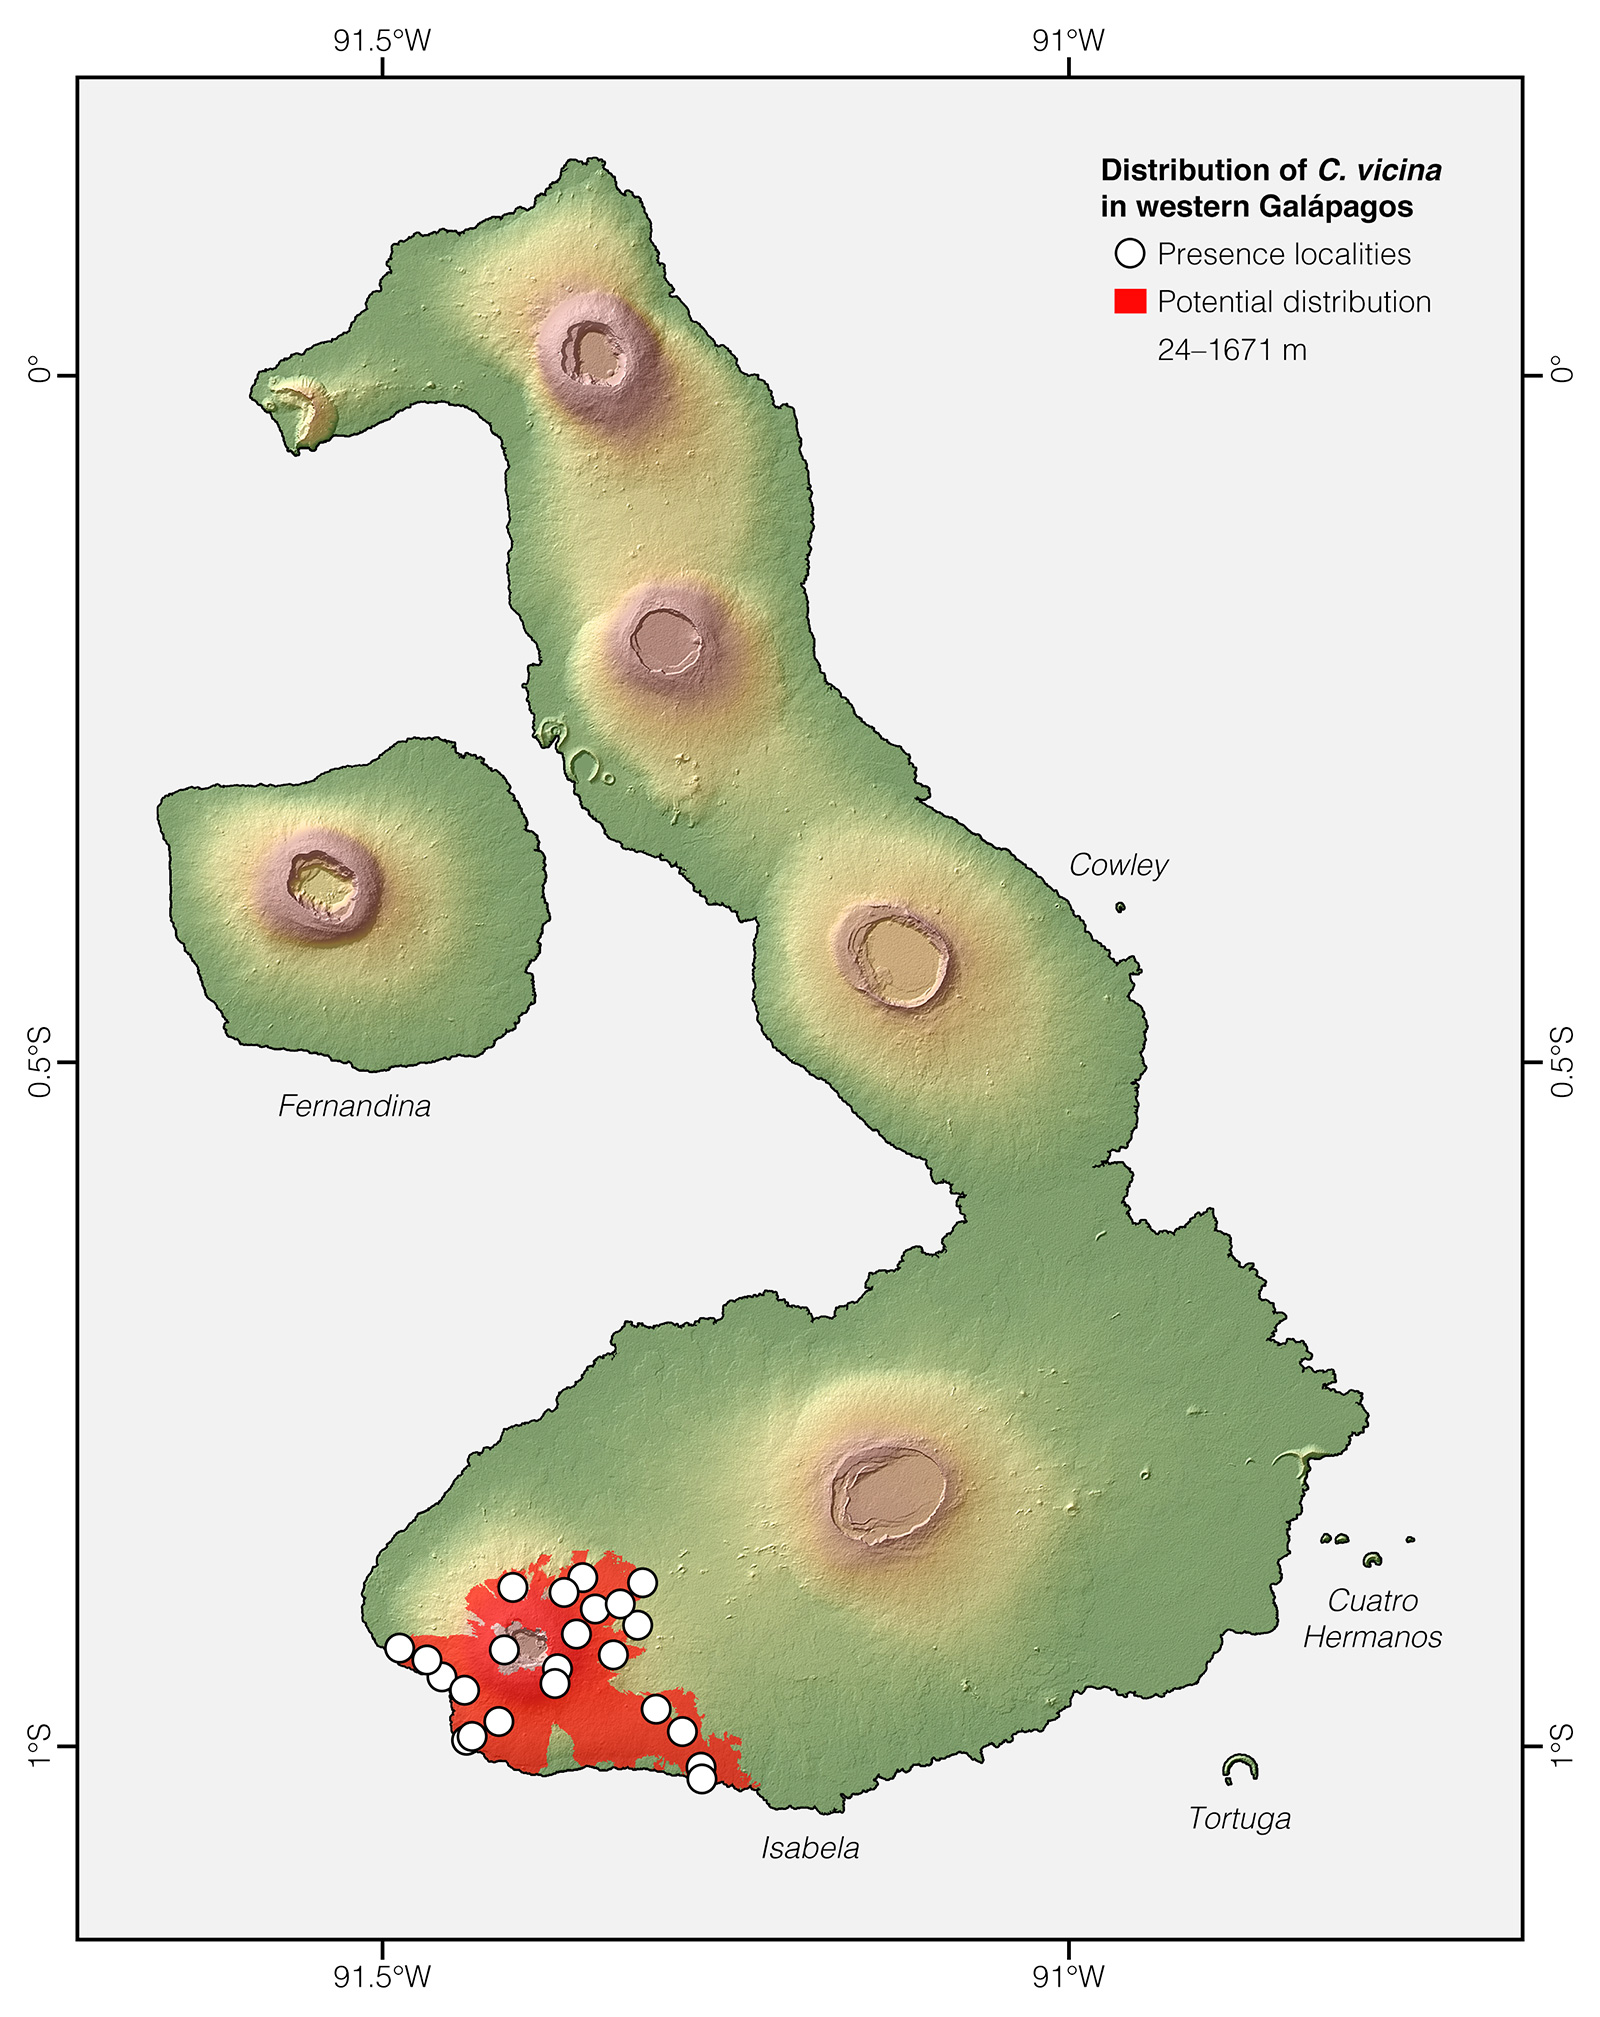 Distribution of Chelonoidis vicina in western Galápagos